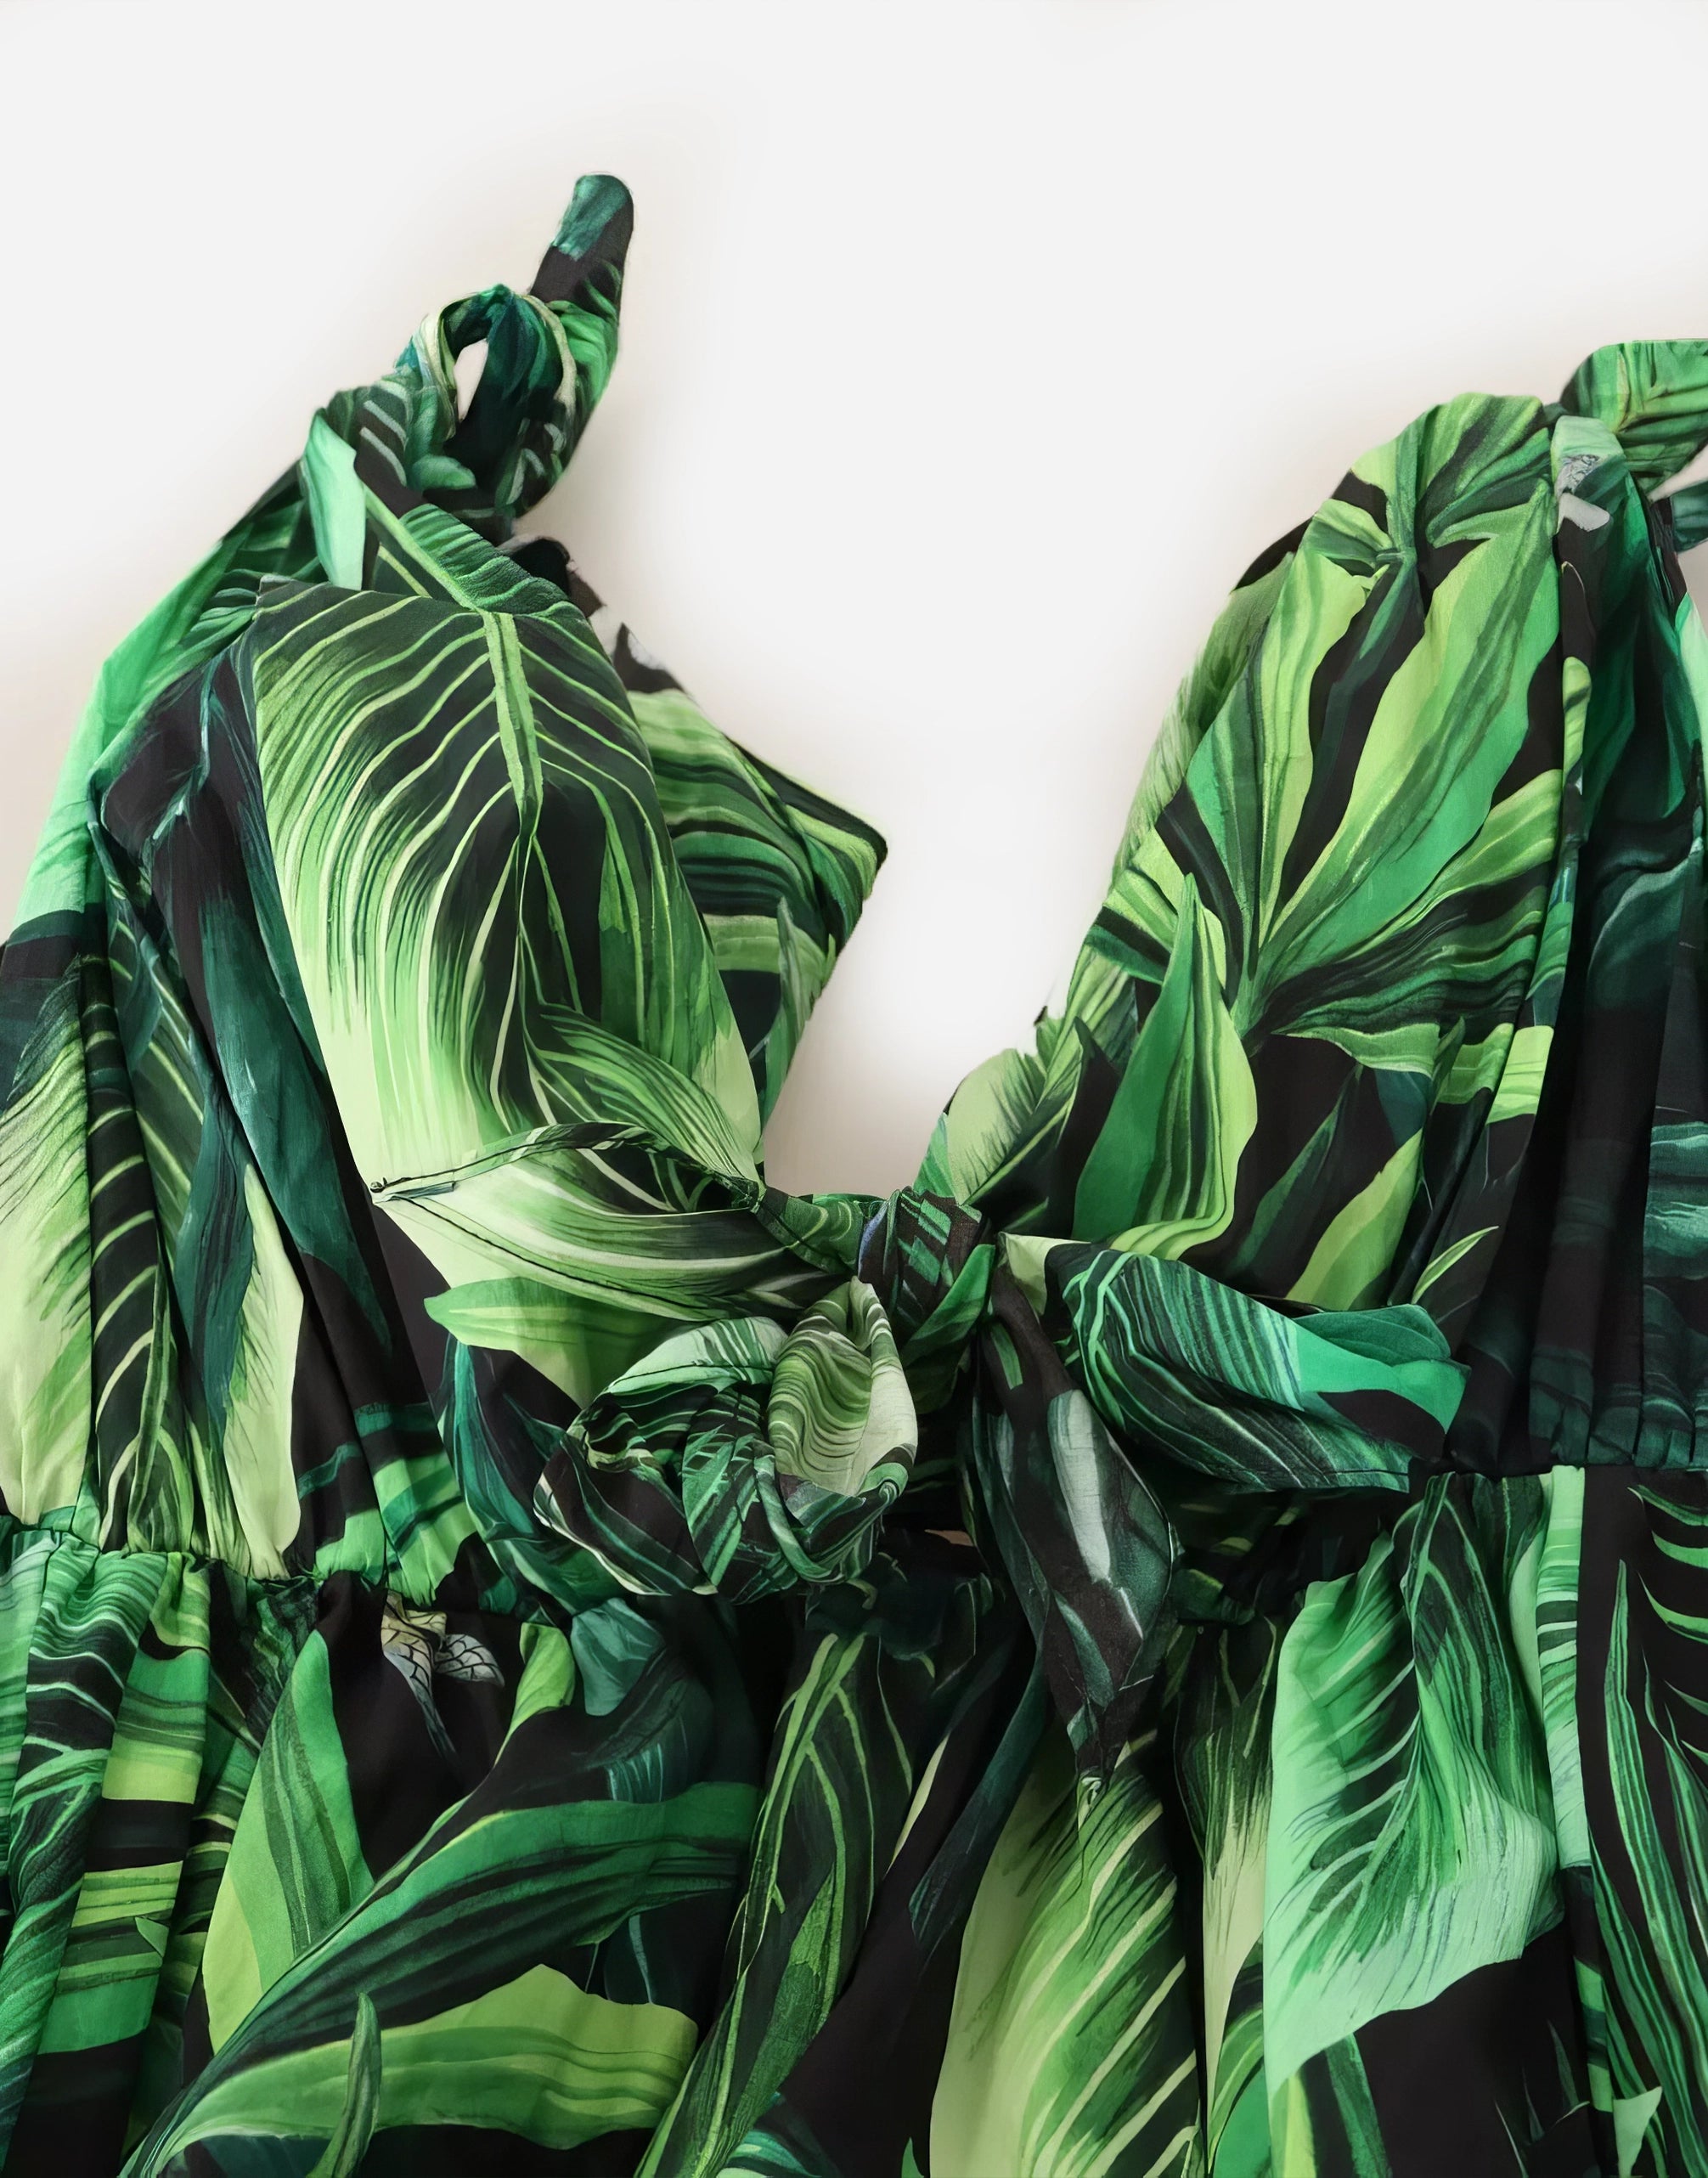 Short Poplin Dress With Leaf Print